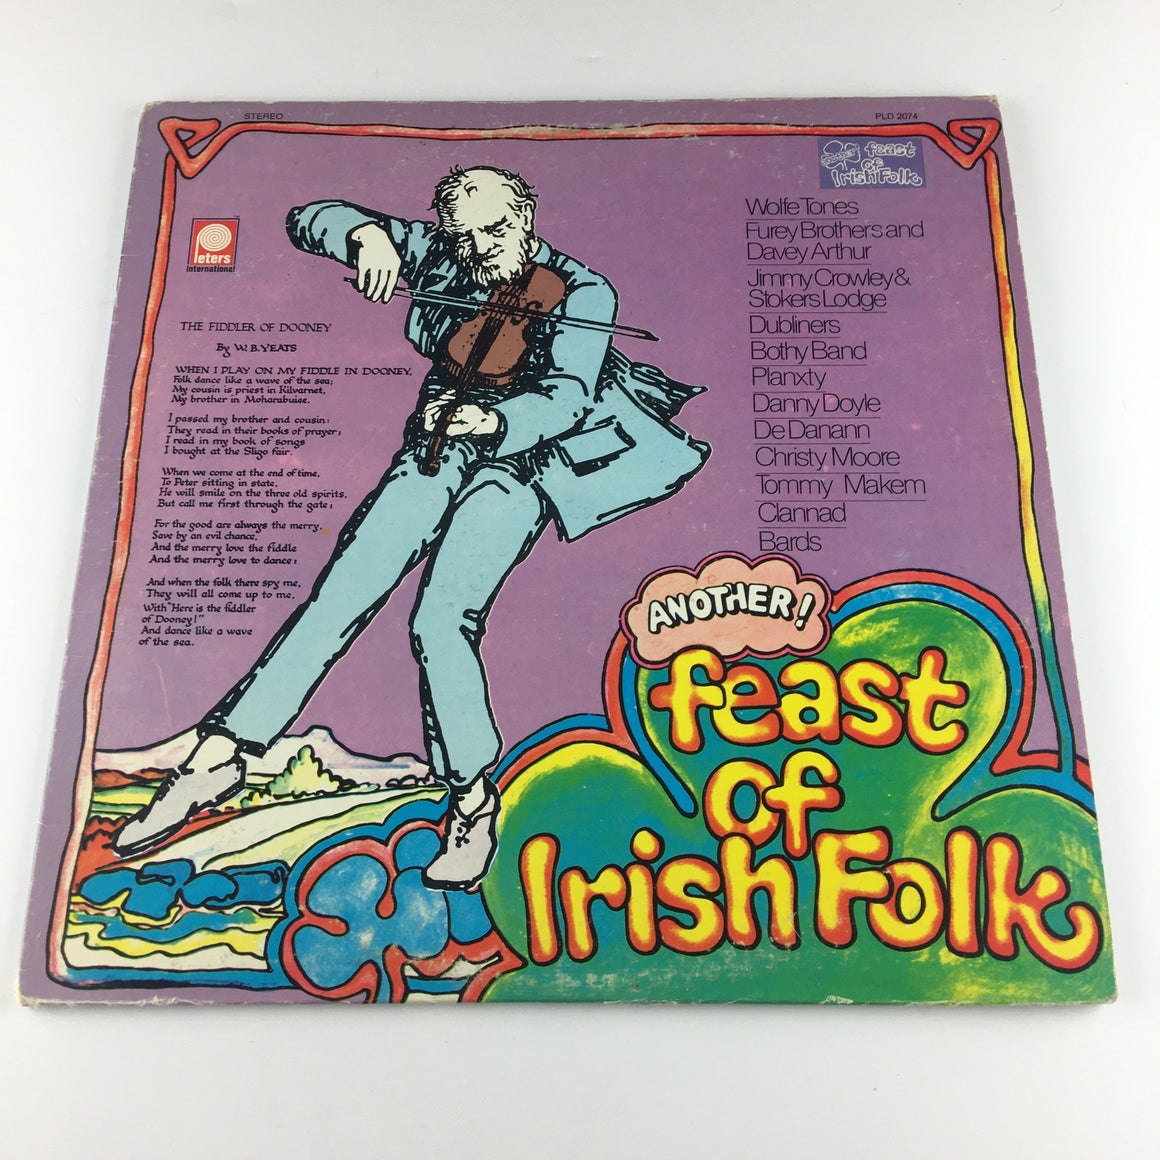 Various Another Feast Of Irish Folk Used Vinyl LP VG+\G+